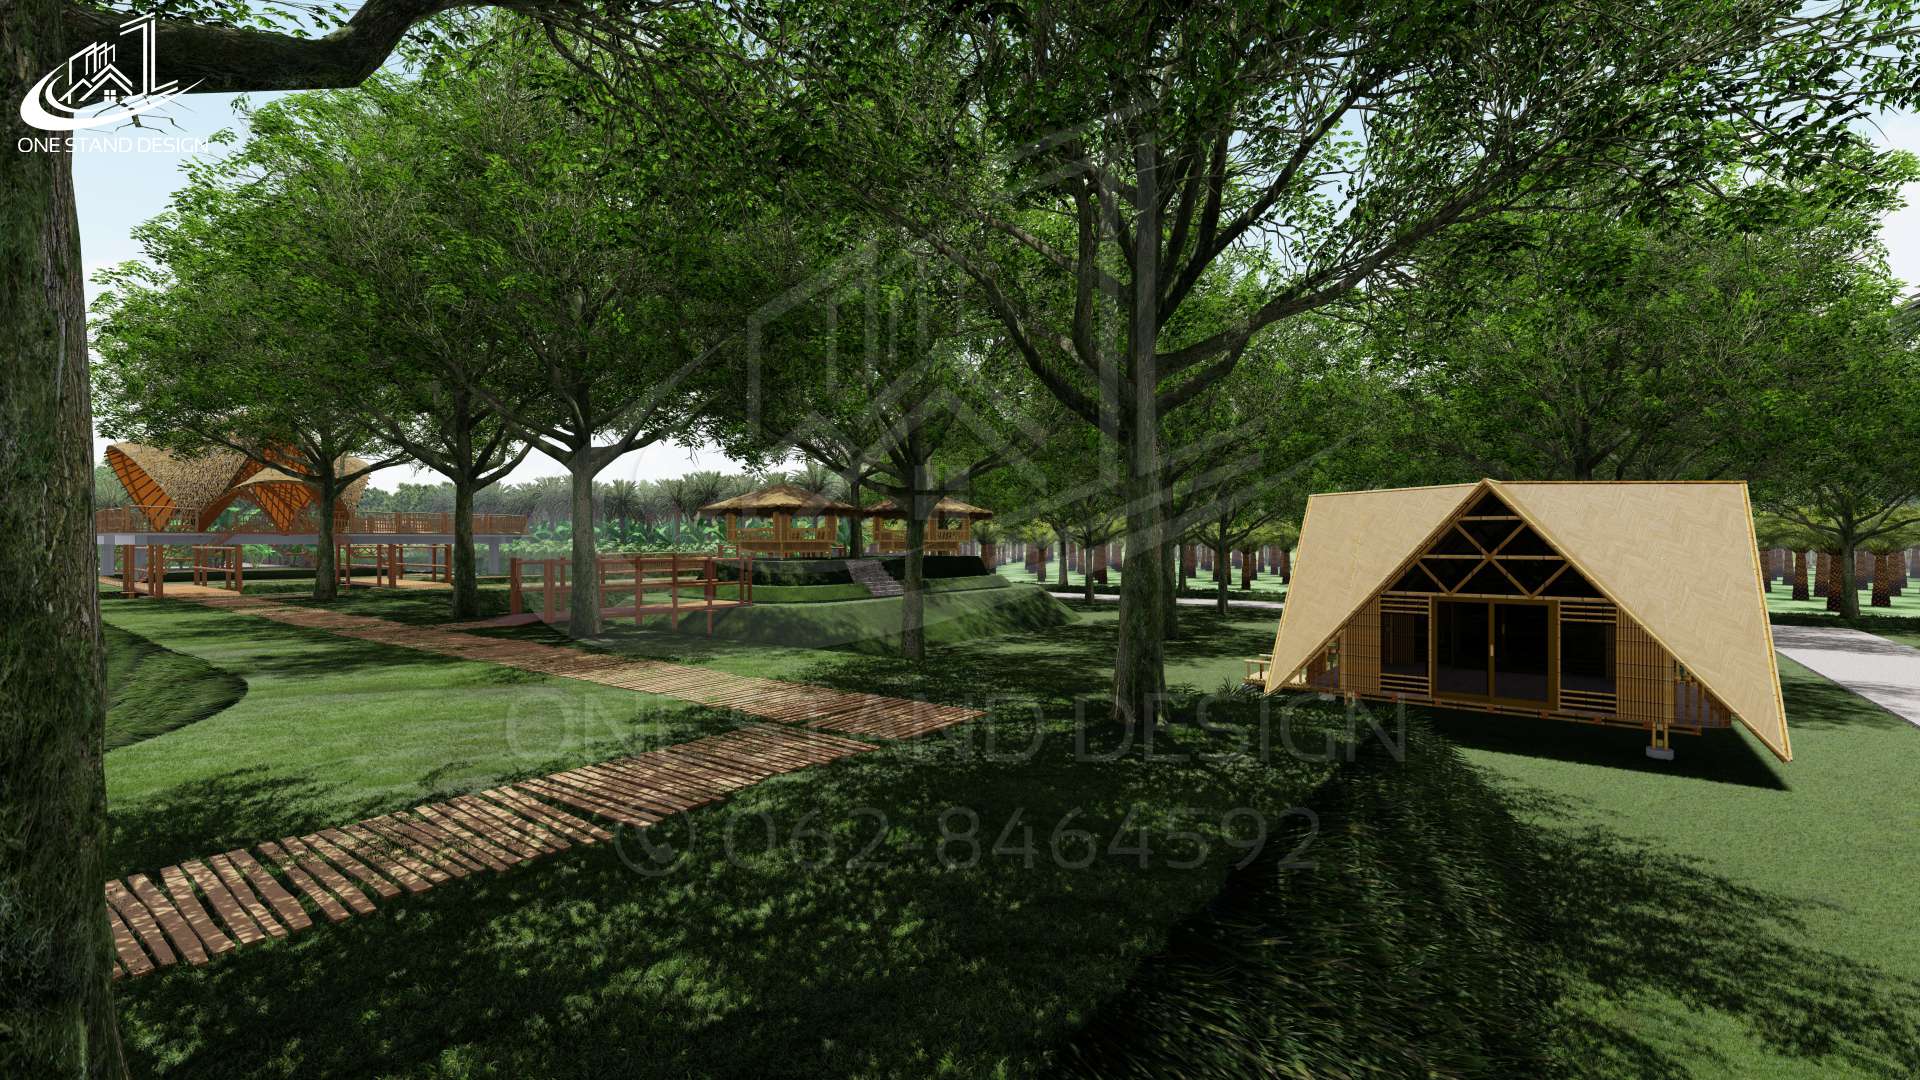 One Stand Design Company, รับออกแบบ 3D Floor plan, รับออกแบบ 3D Perspective, Landscape Design